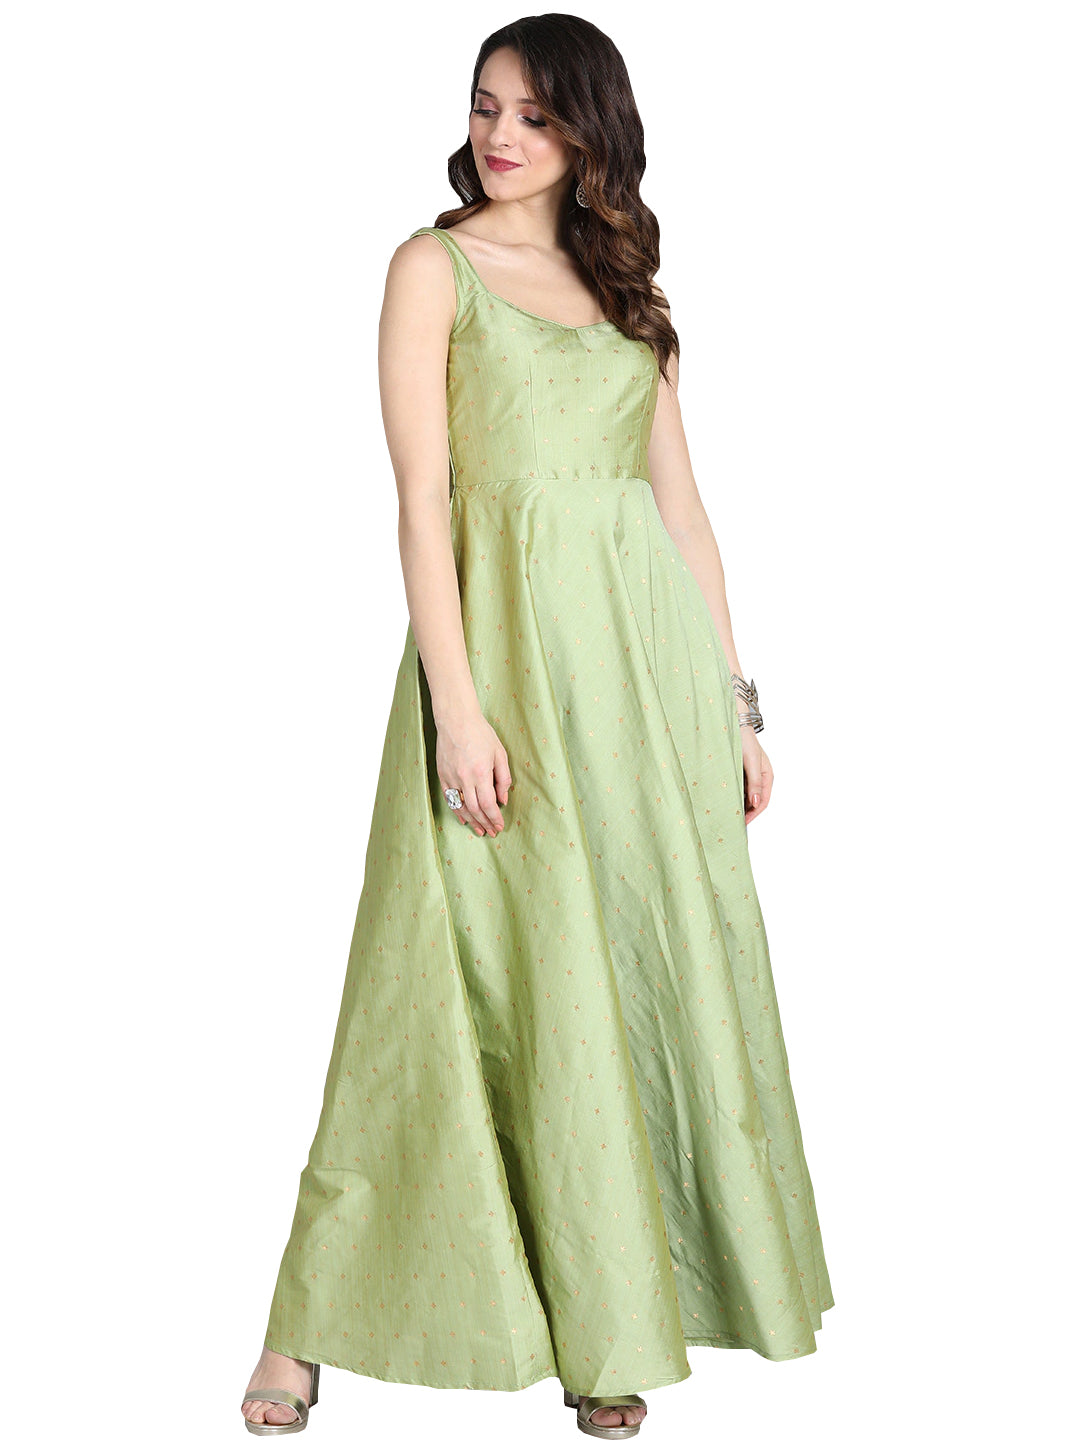 Pista-Green-Taffeta-Gown